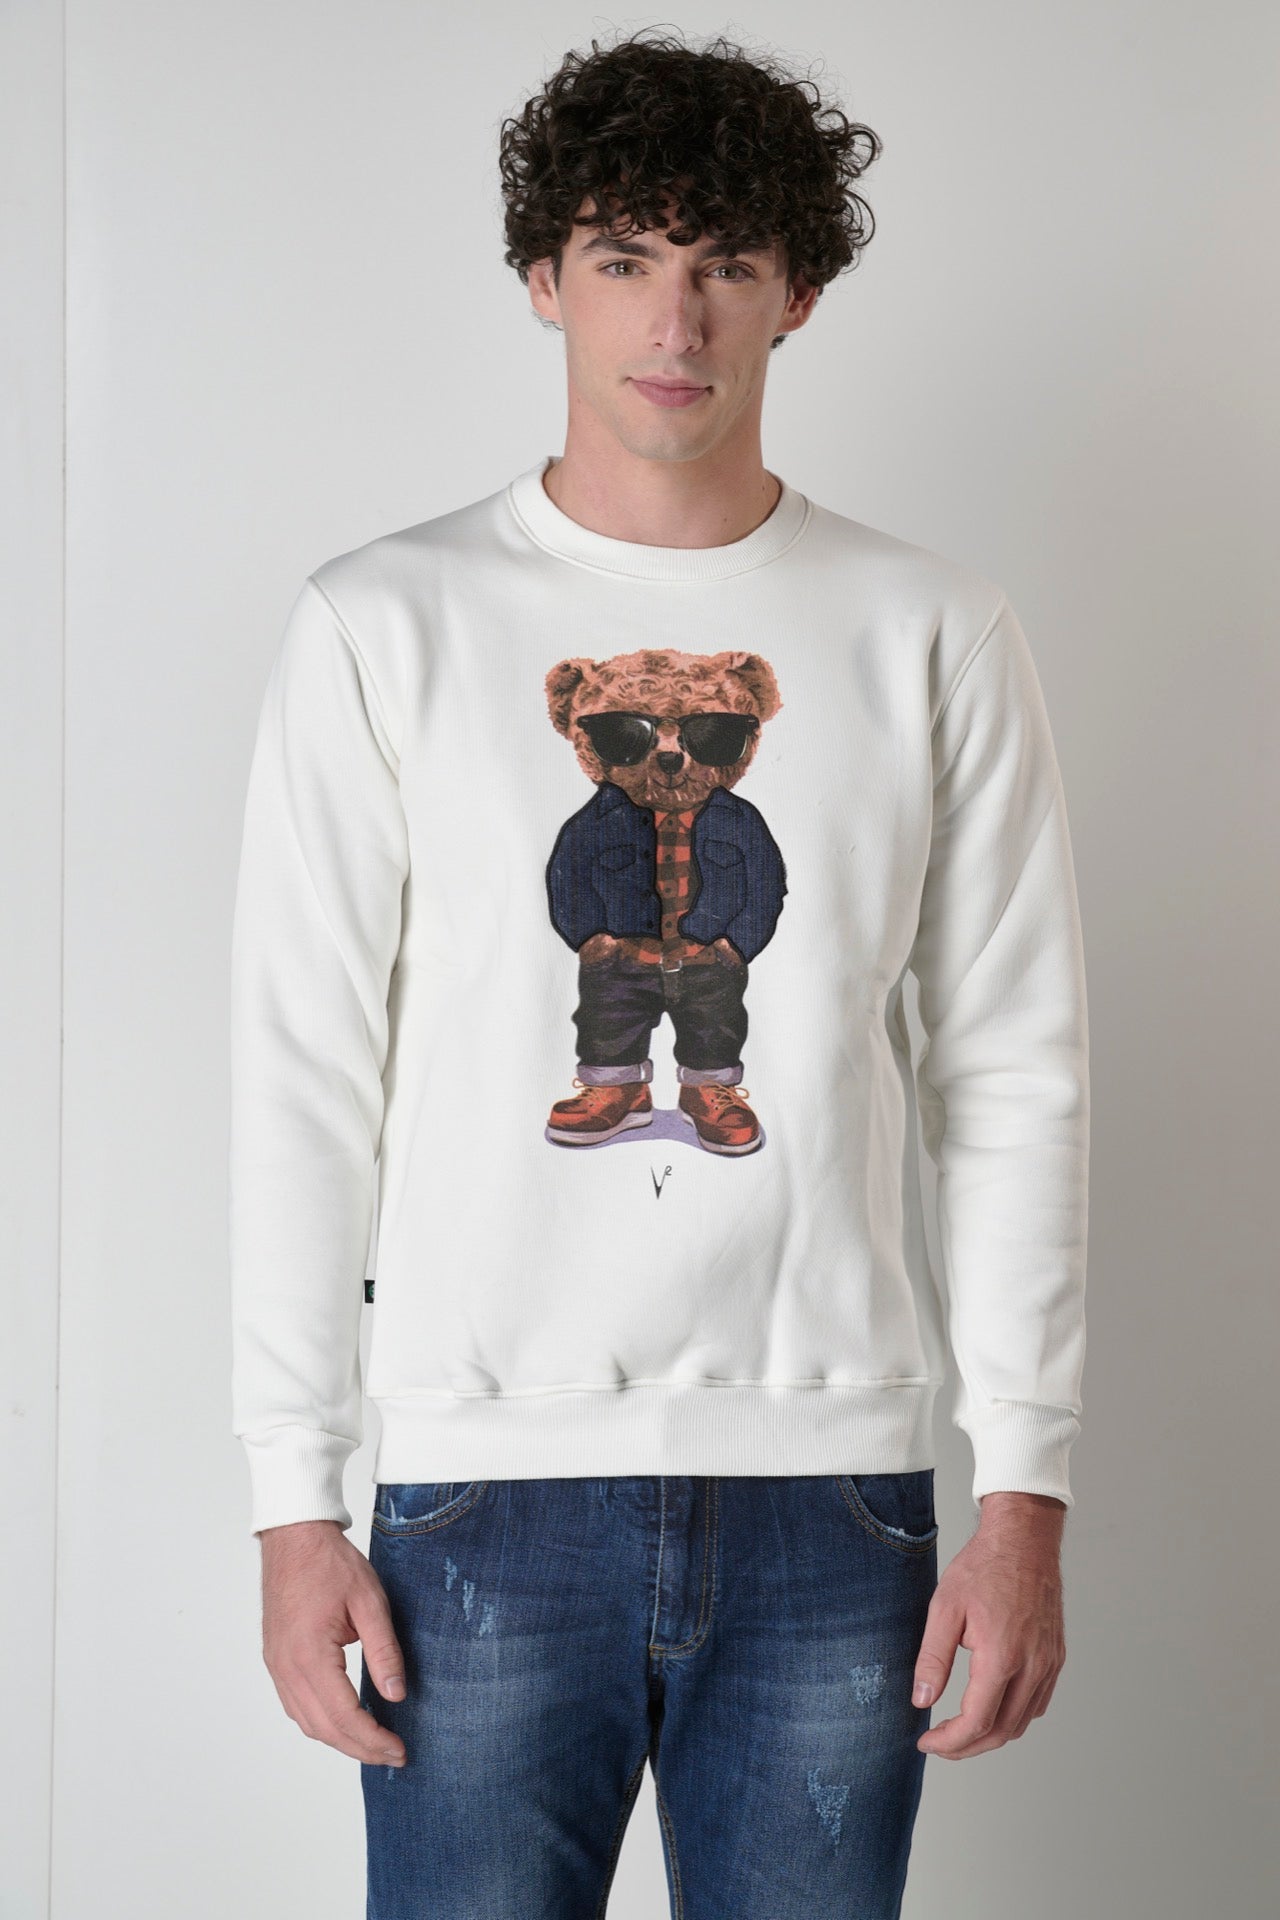 Cream sweatshirt with Teddy print and jeans fabric insert